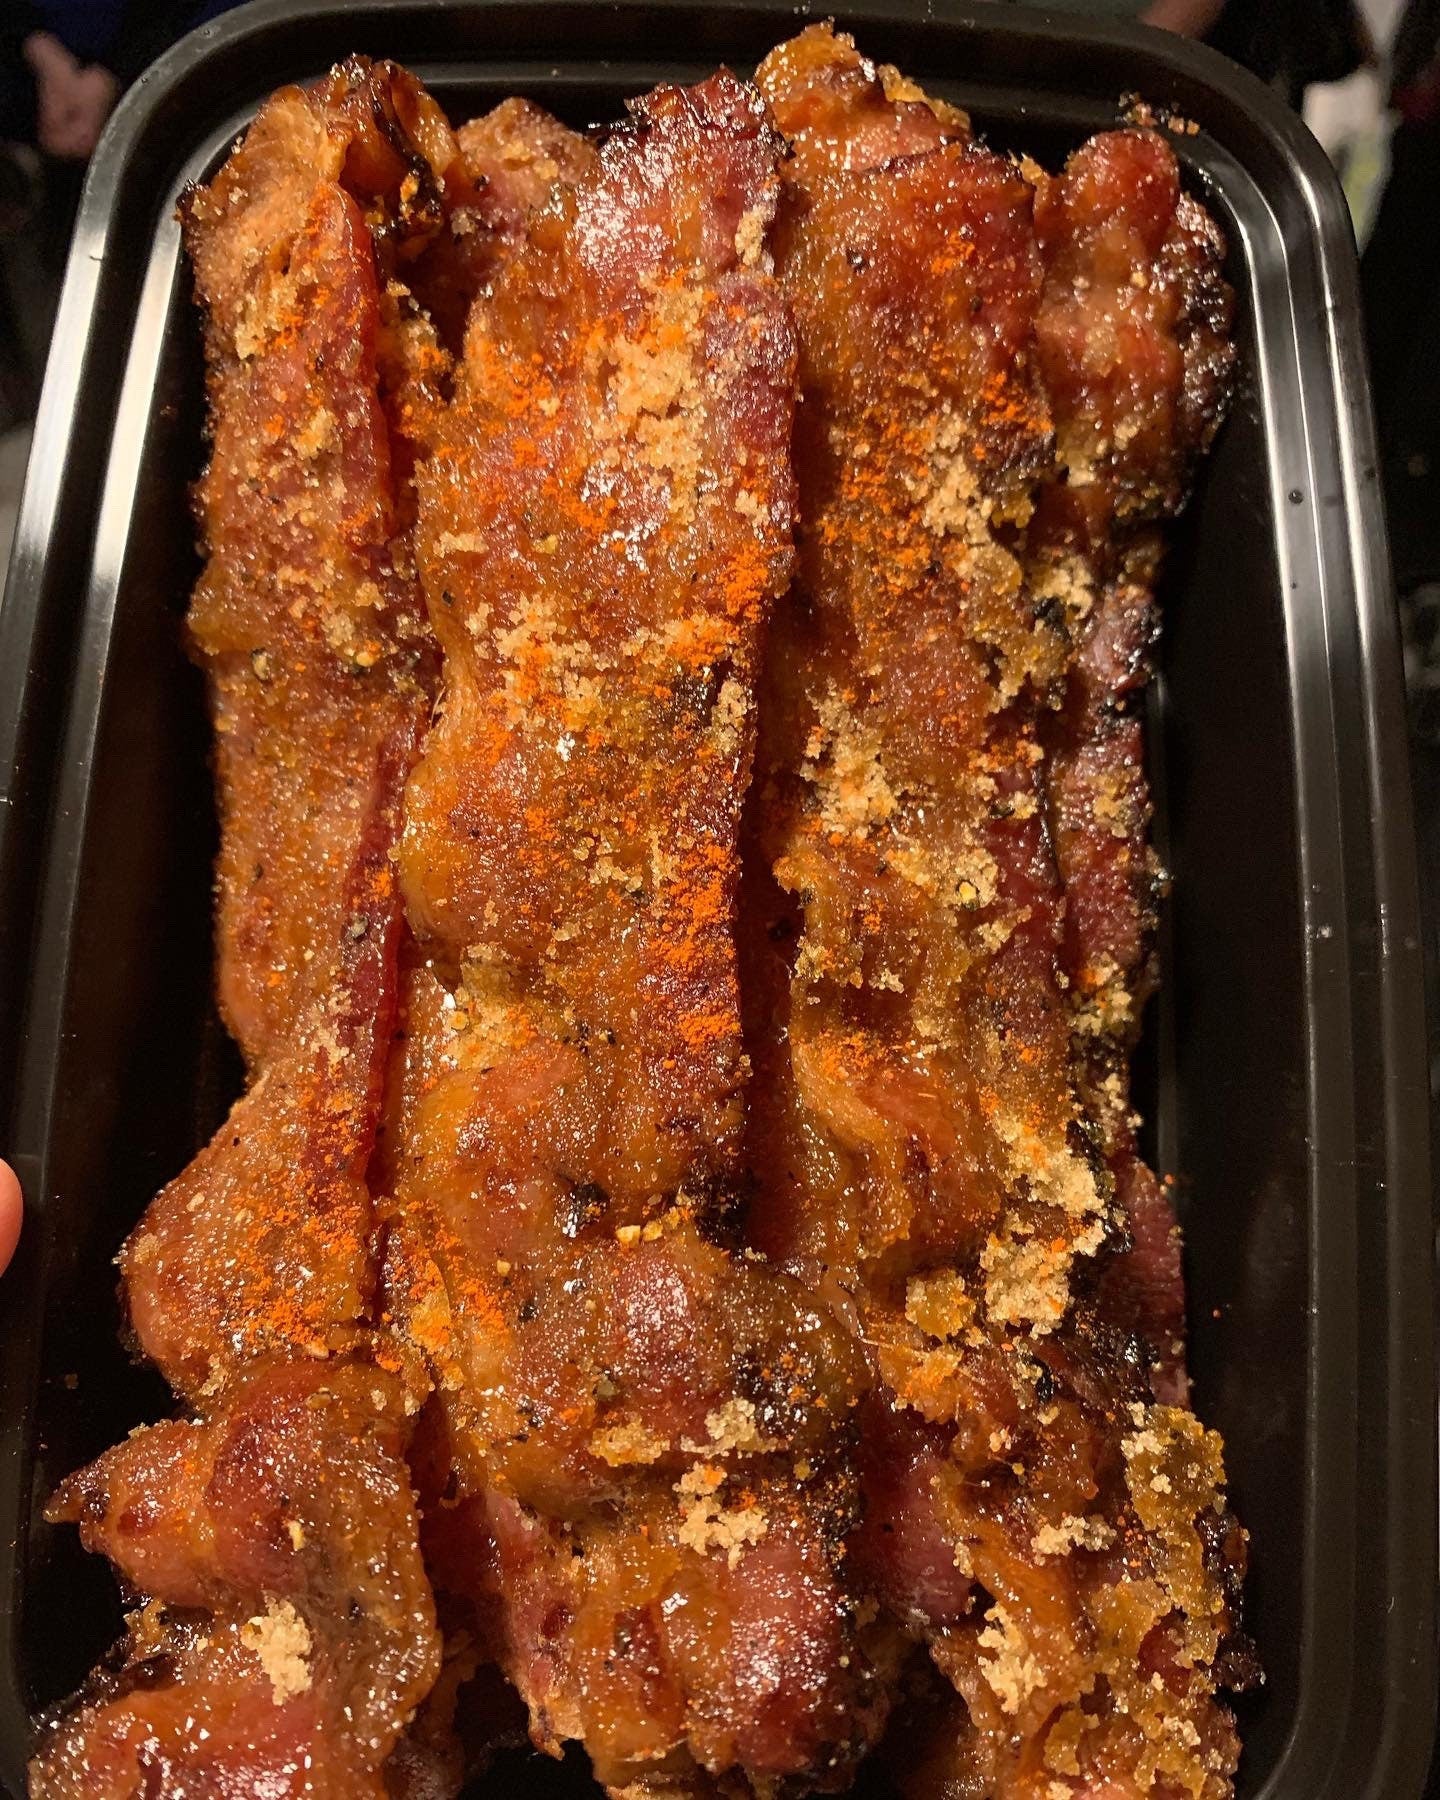 Keto Candied Bacon - 0 NET CARBS per serving- gluten free, paleo friendly, sugar free